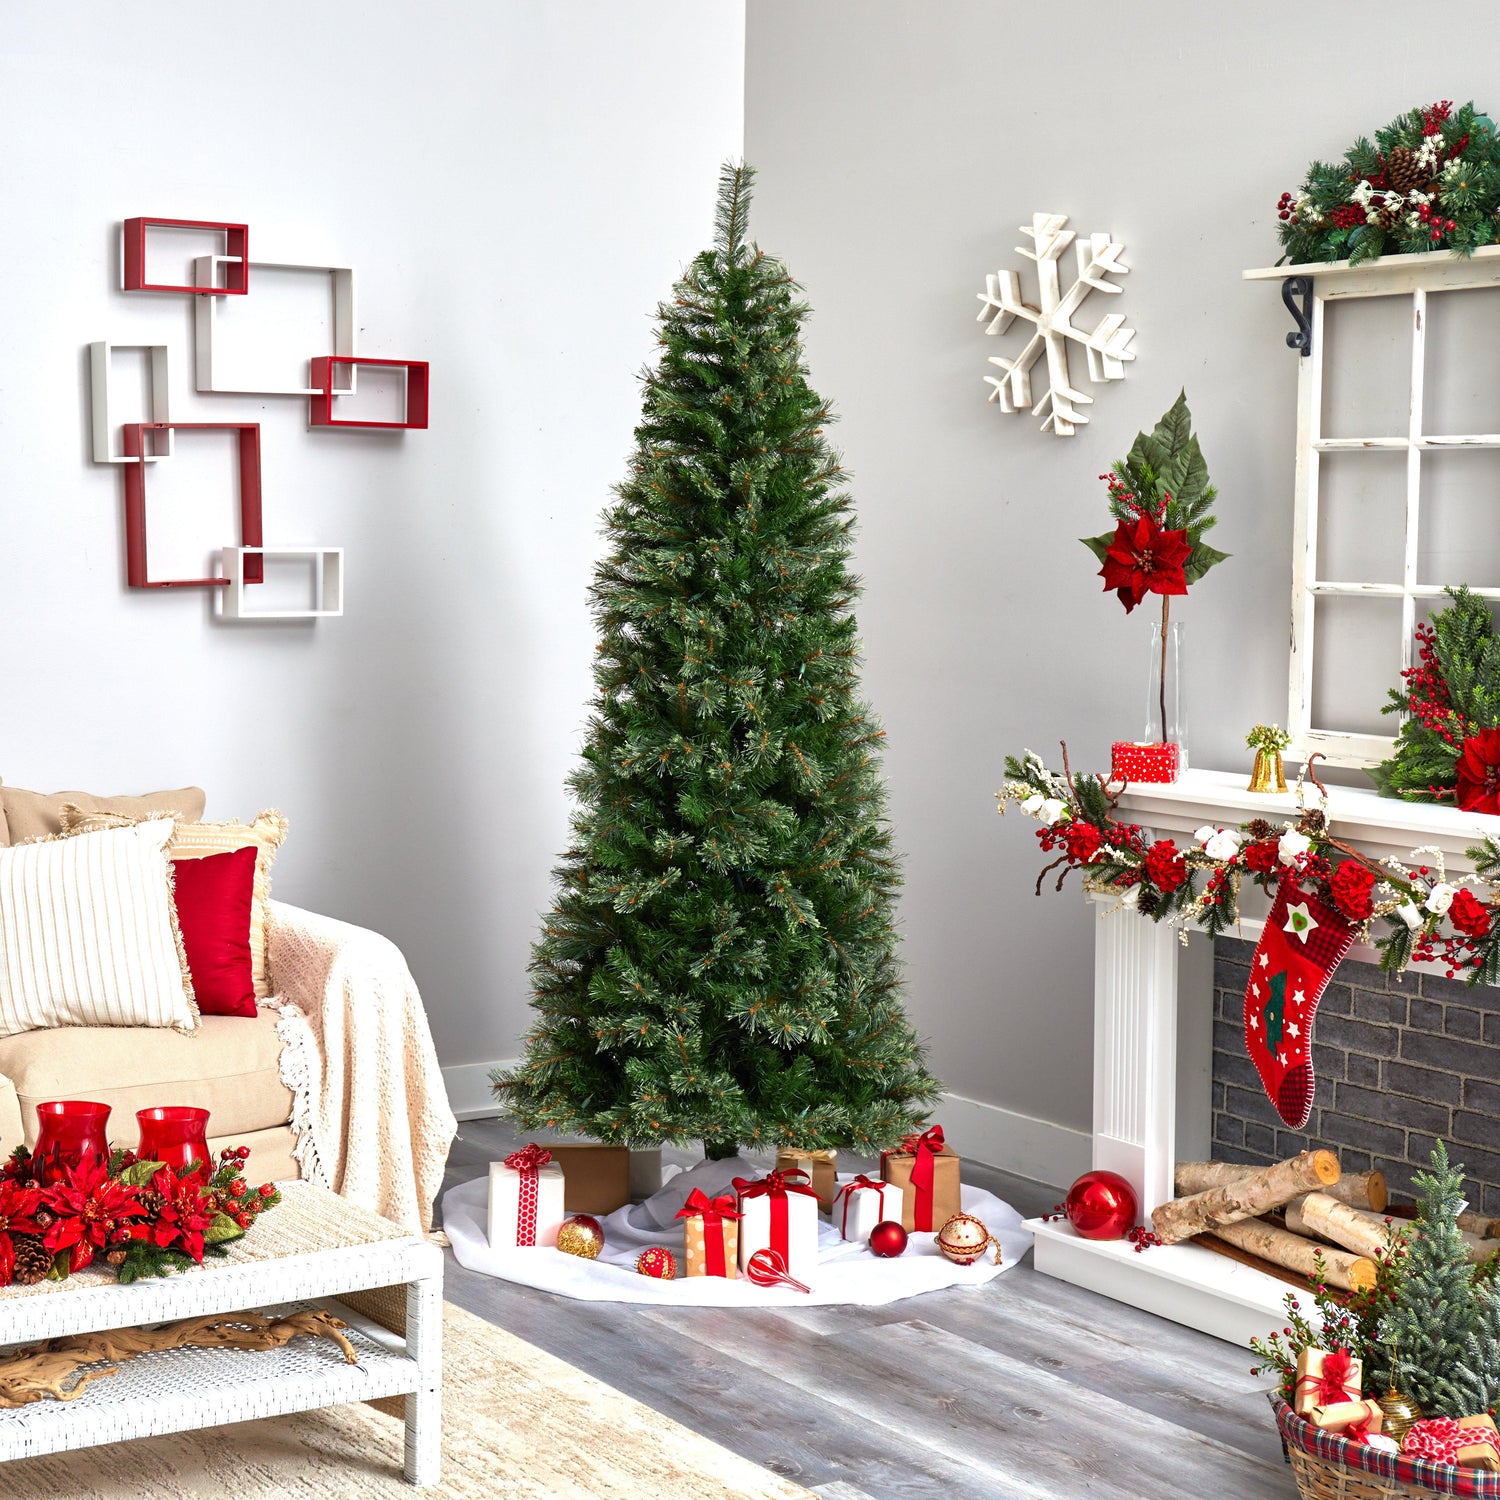 7.5’ Cashmere Slim Christmas Tree w/Clear Lights